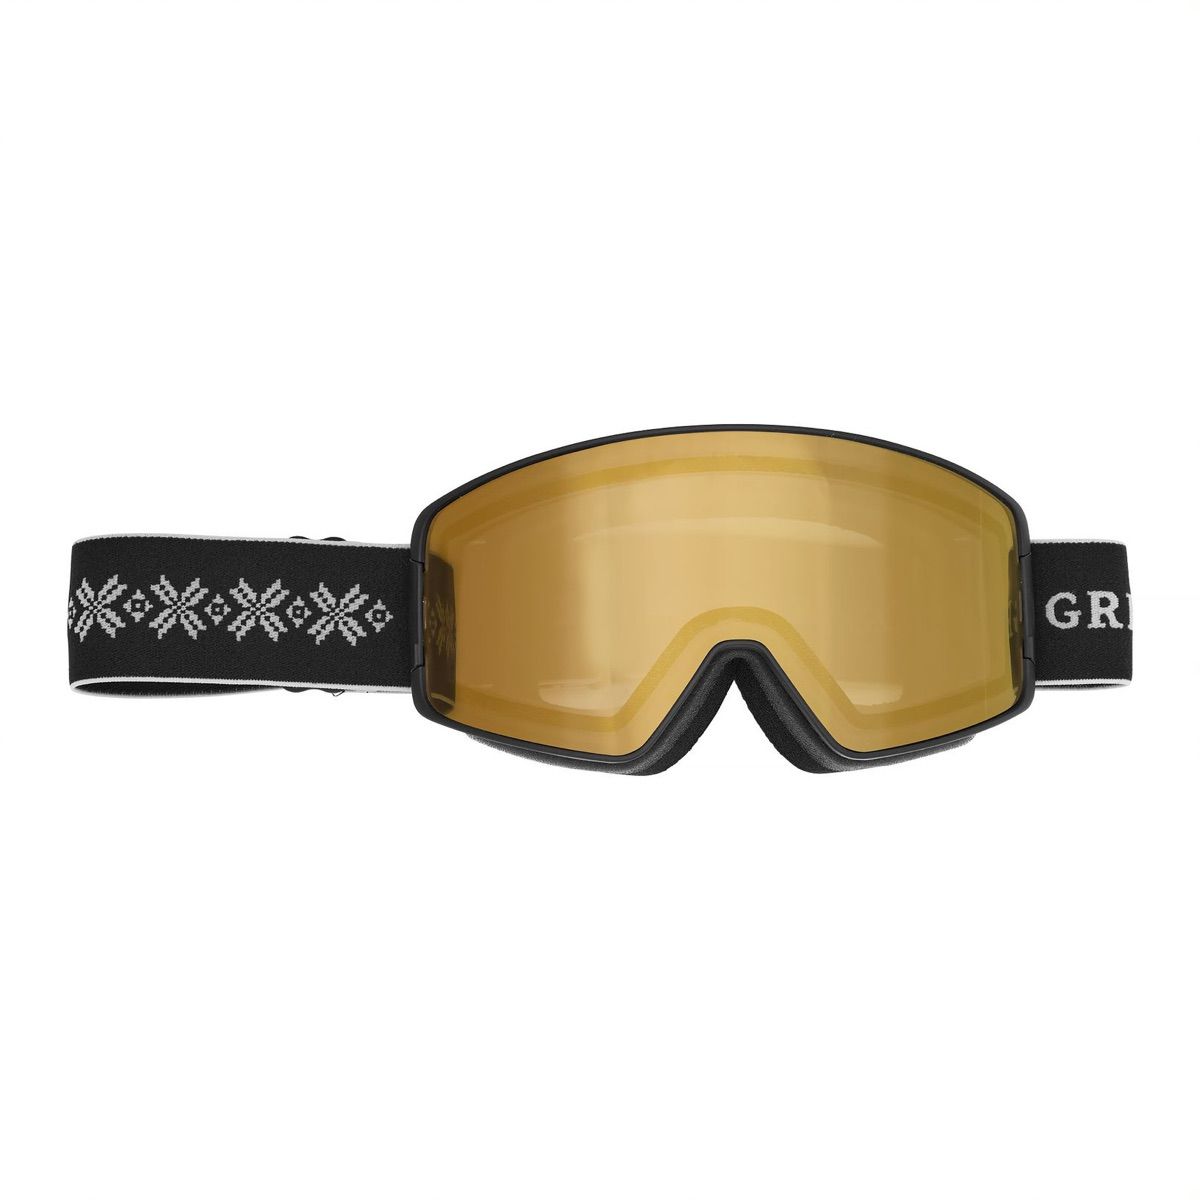 Gridarmor Hafjell Ski Goggles Black